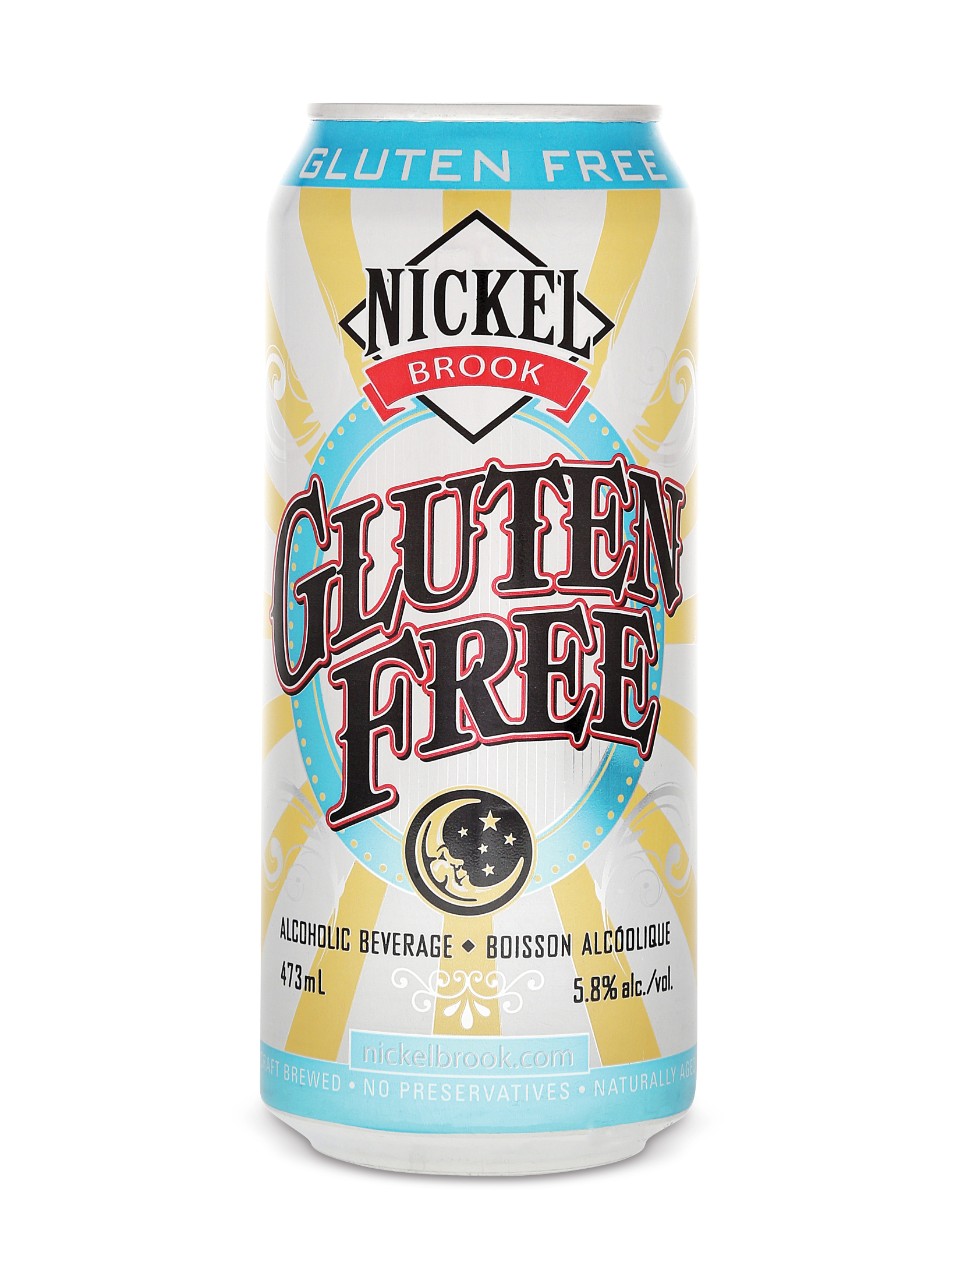 Nickel Brook is offering their Gluten Free beer at the 2016 Windsor Craft Beer Festival!